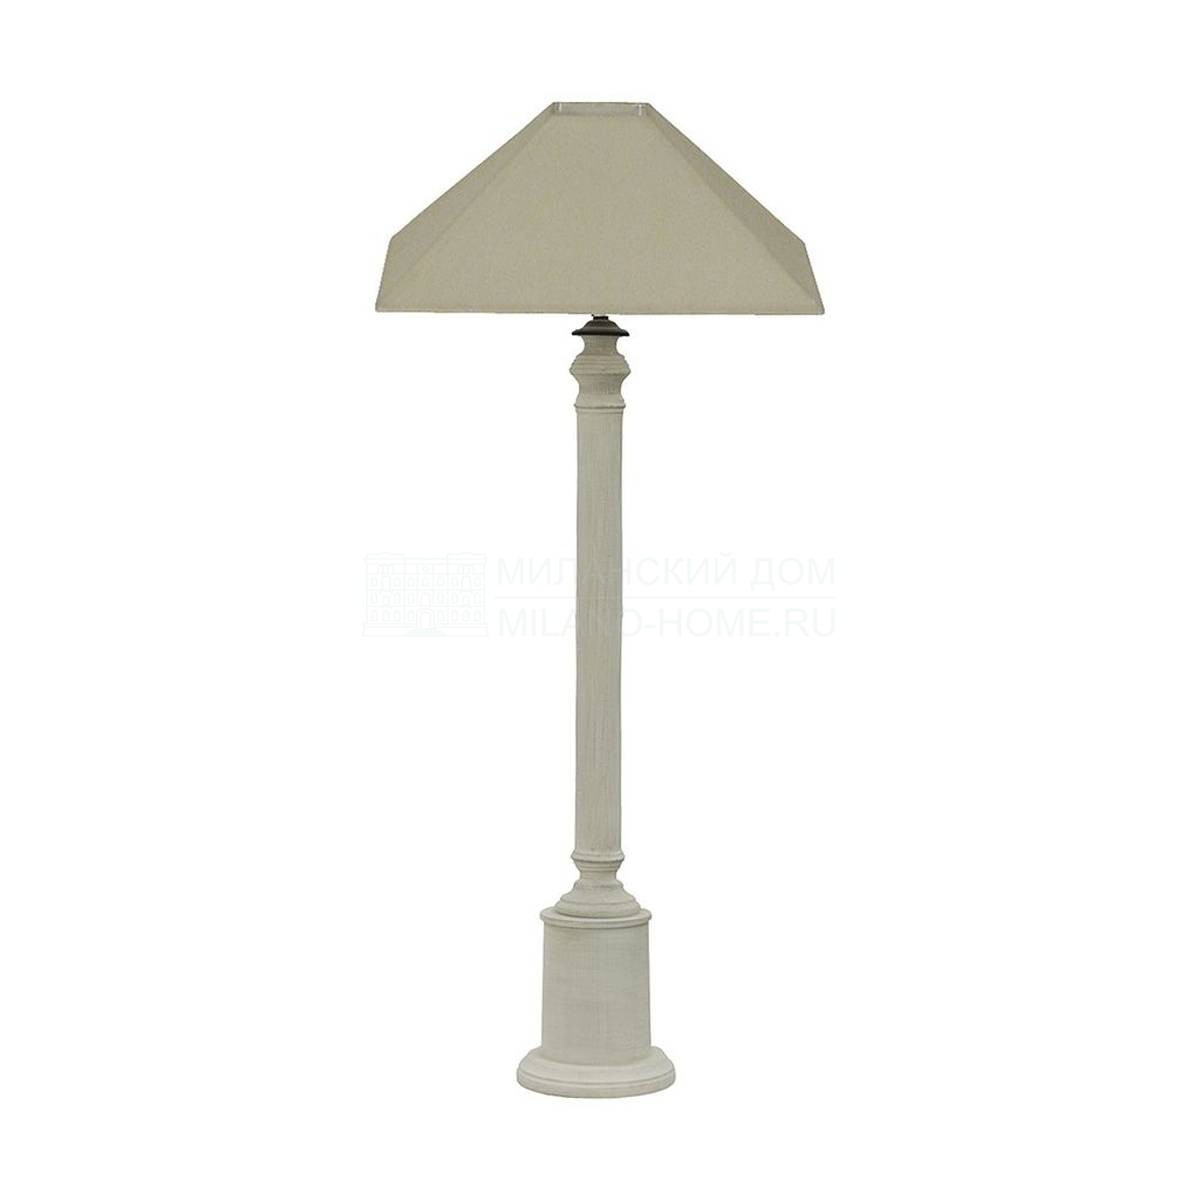 Настольная лампа S-62124 table lamp из Испании фабрики GUADARTE